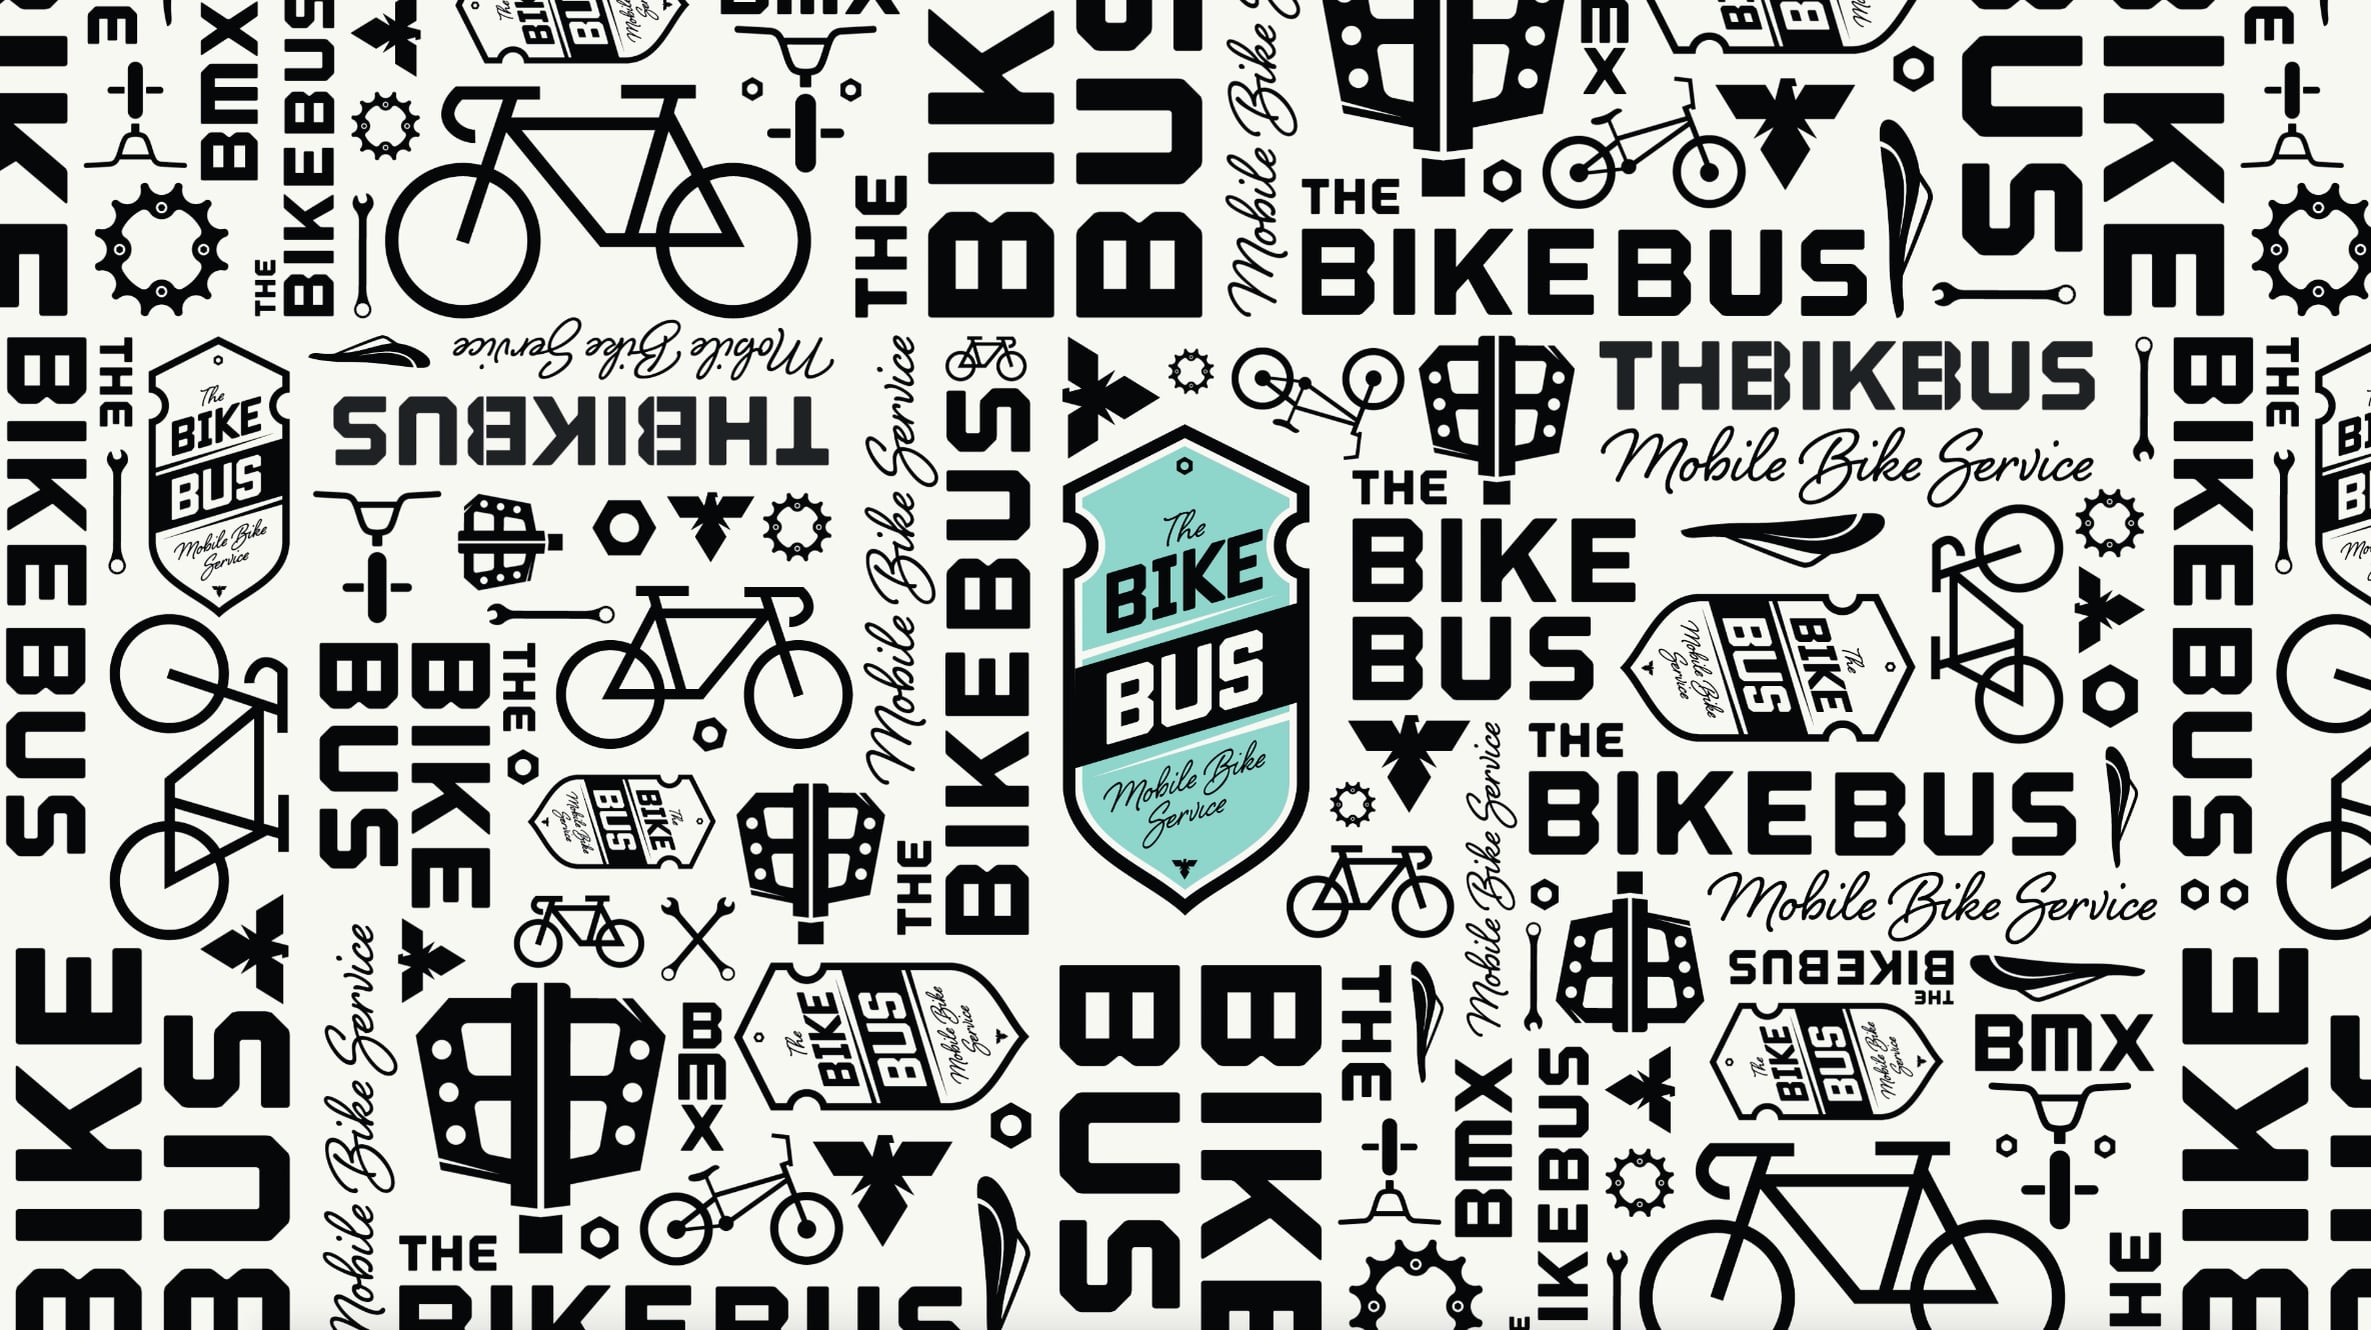 The Bike Bus